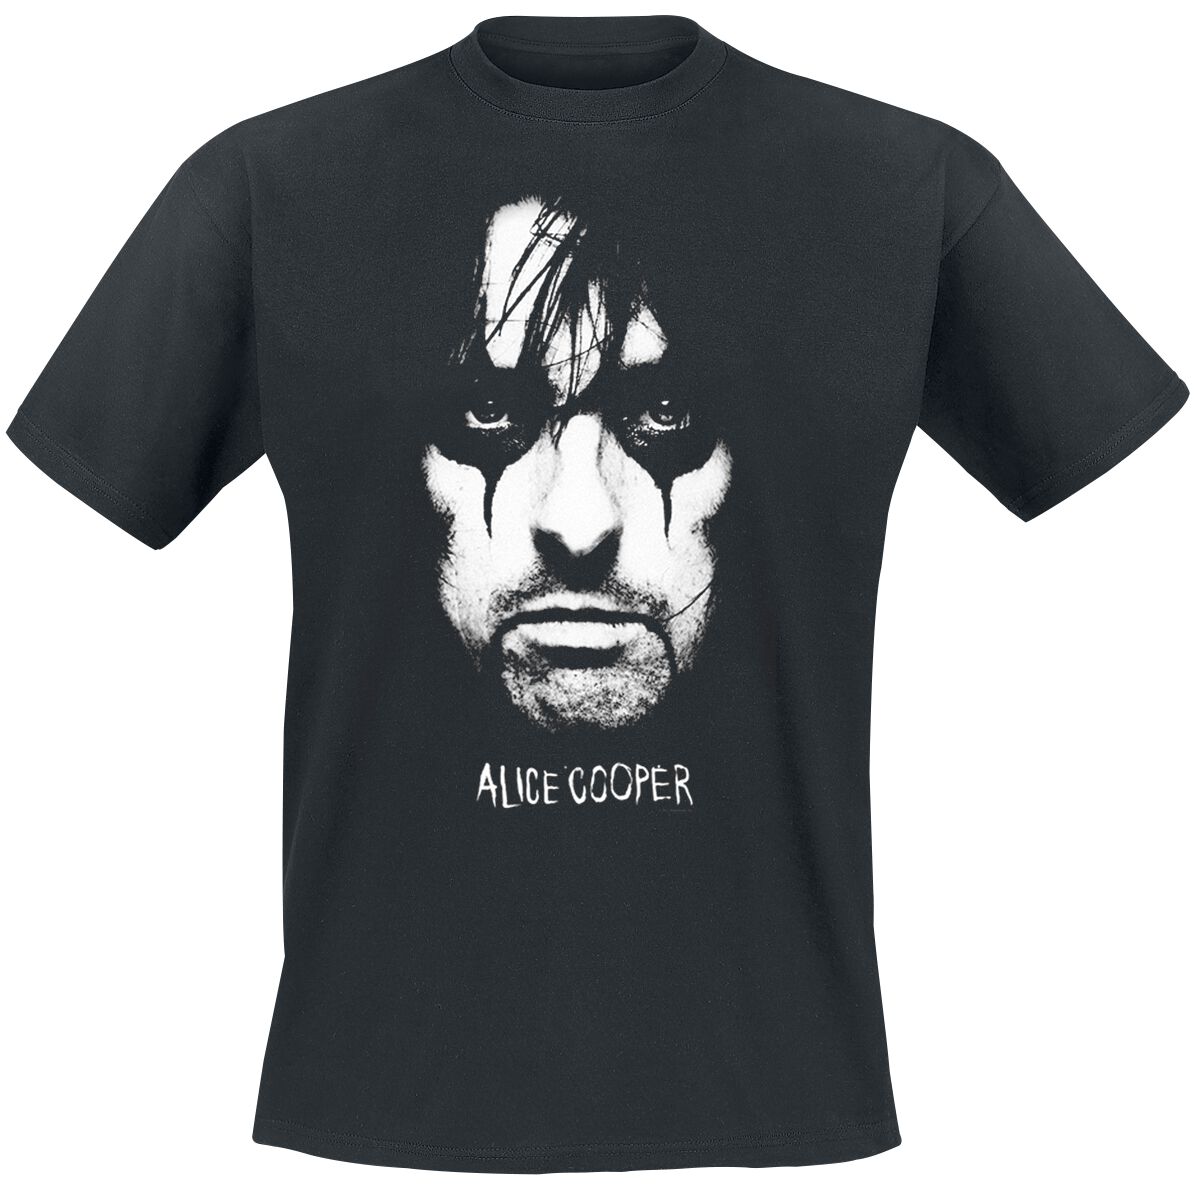 Alice Cooper Portrait T-Shirt black